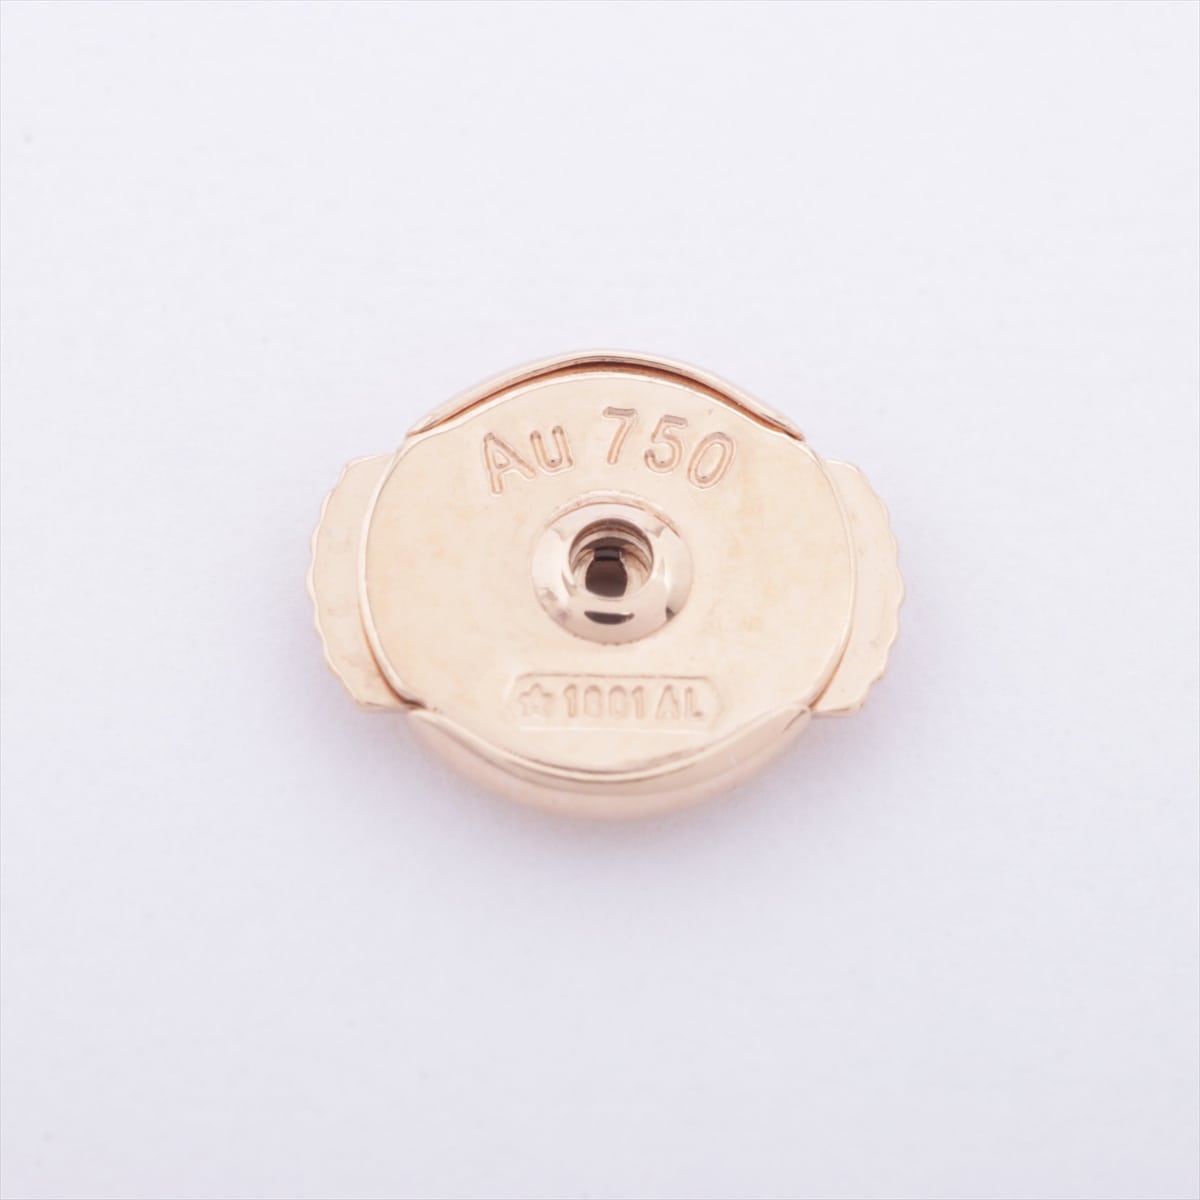 Louis Vuitton Puz Monogram Idylle diamond Piercing jewelry 750 PG 1.1g